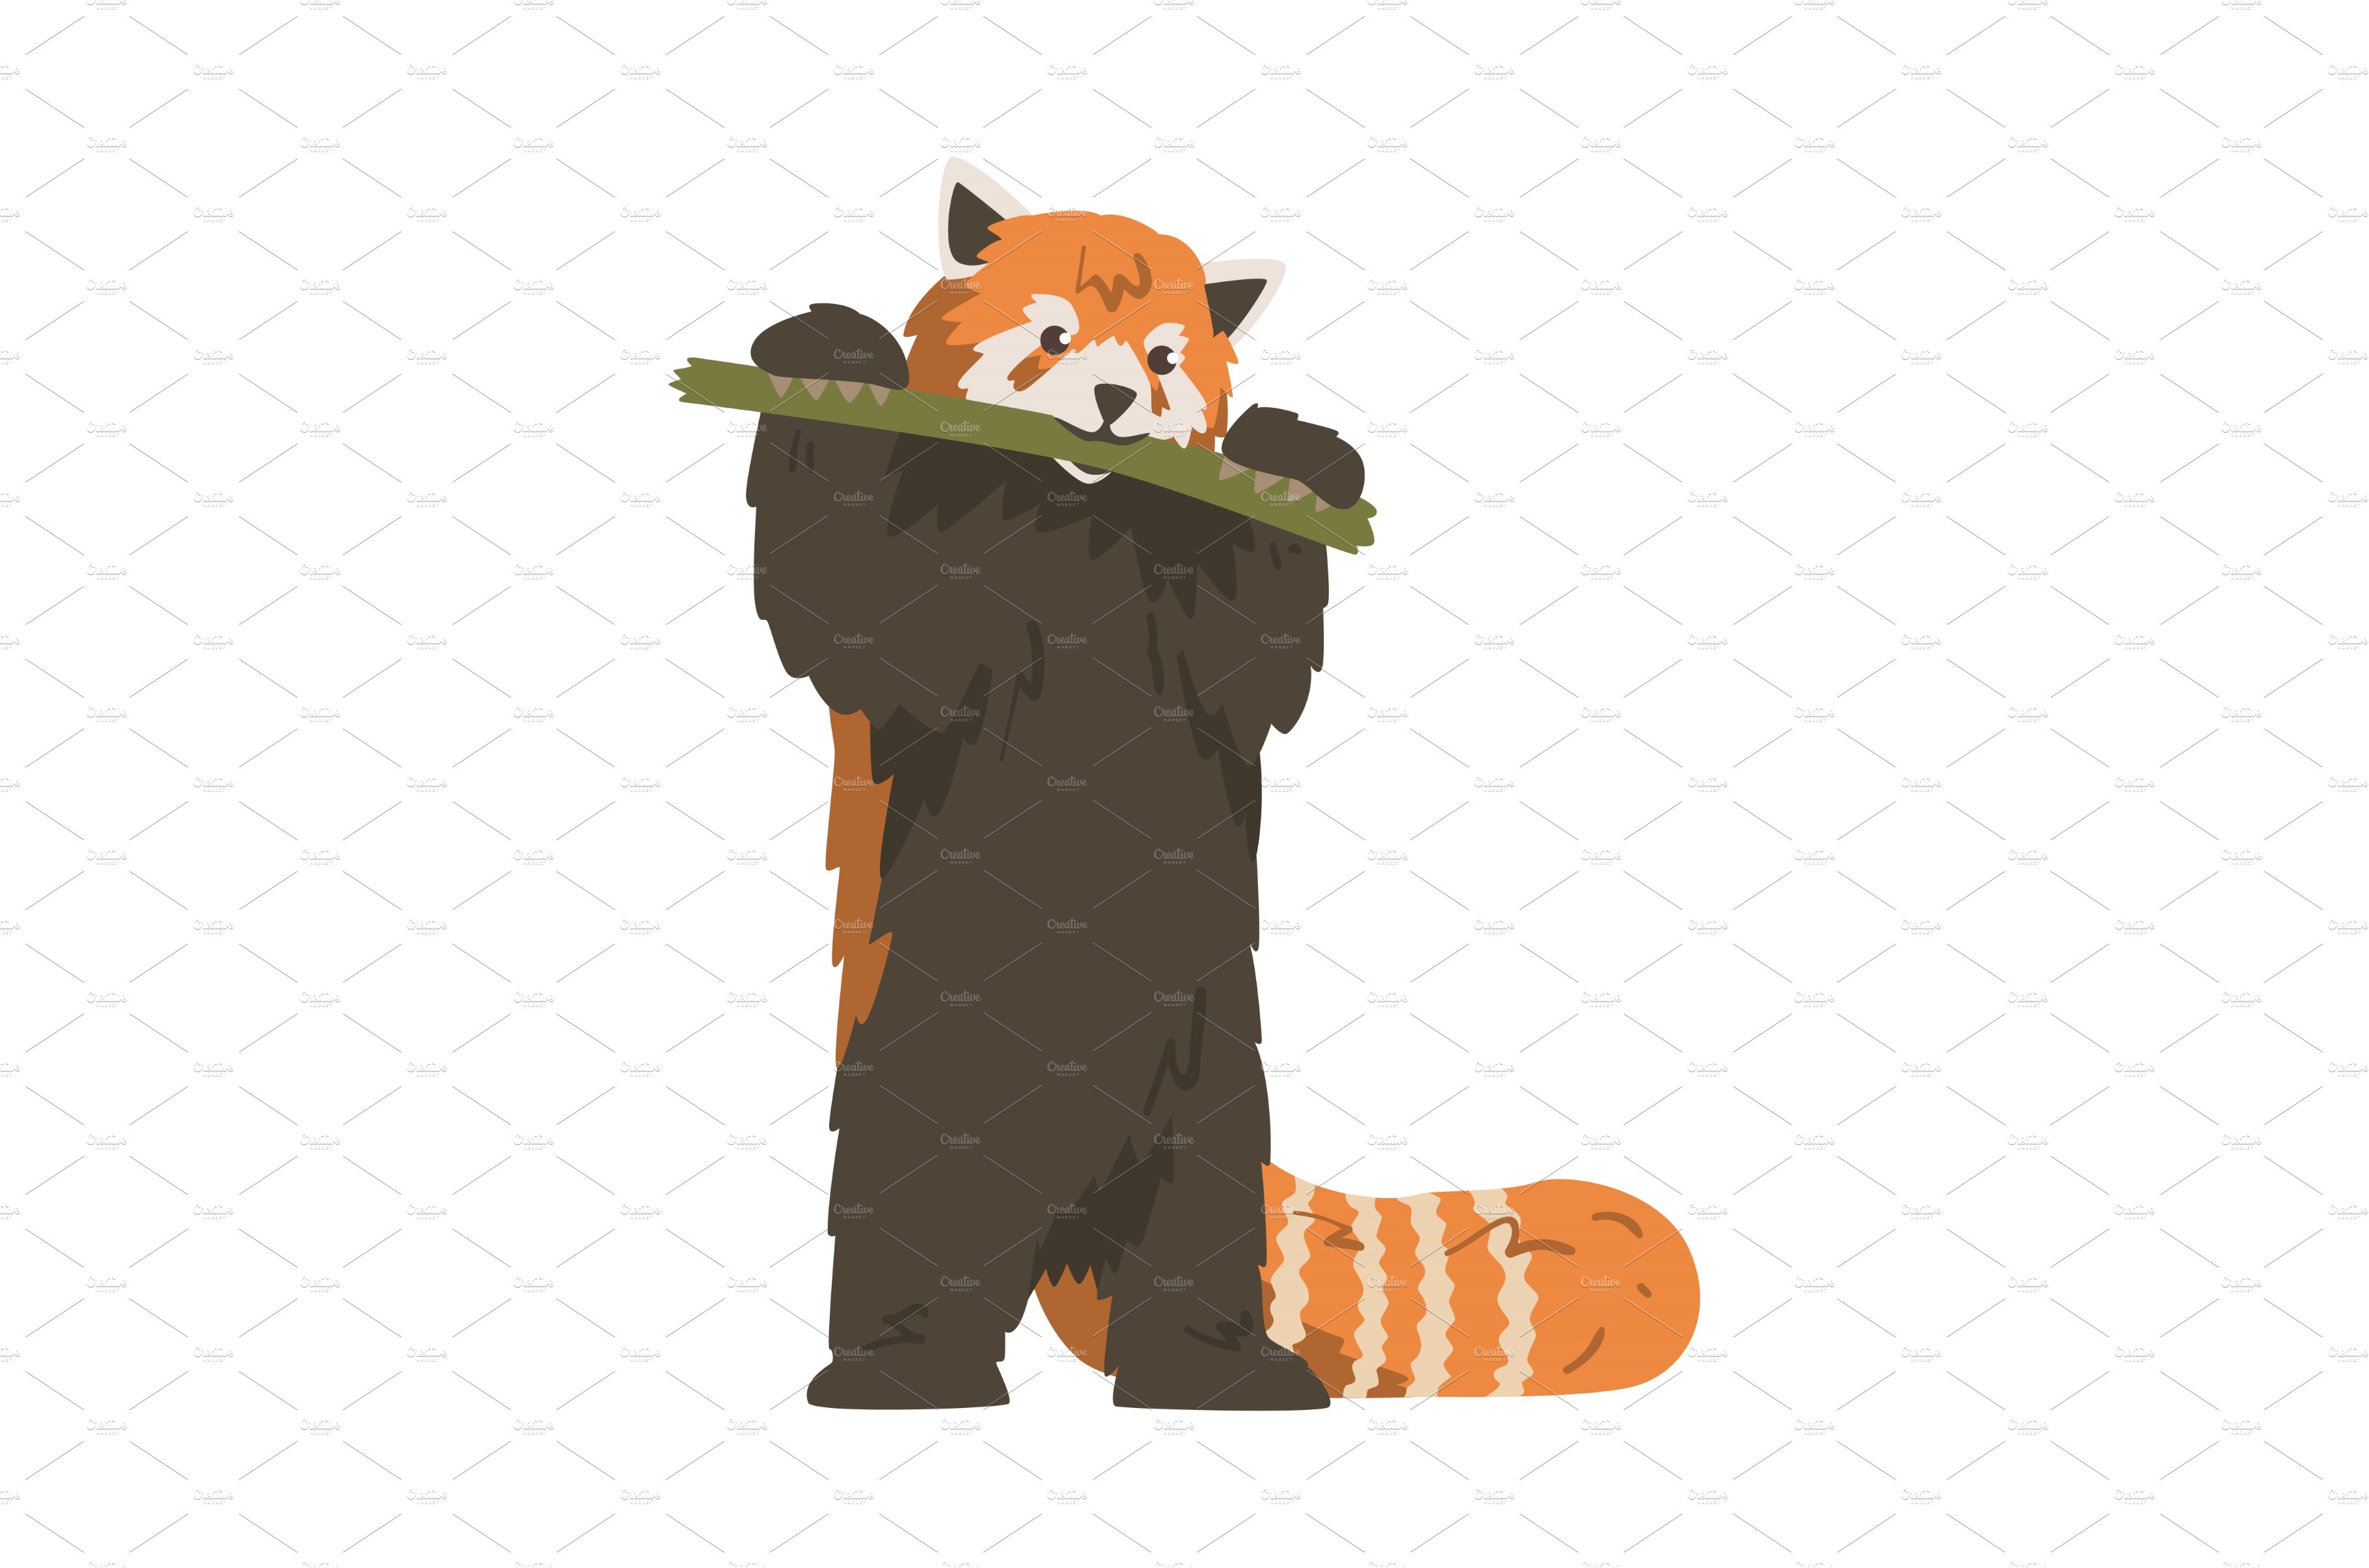 Cute Red Panda Eating Bamboo cover image.